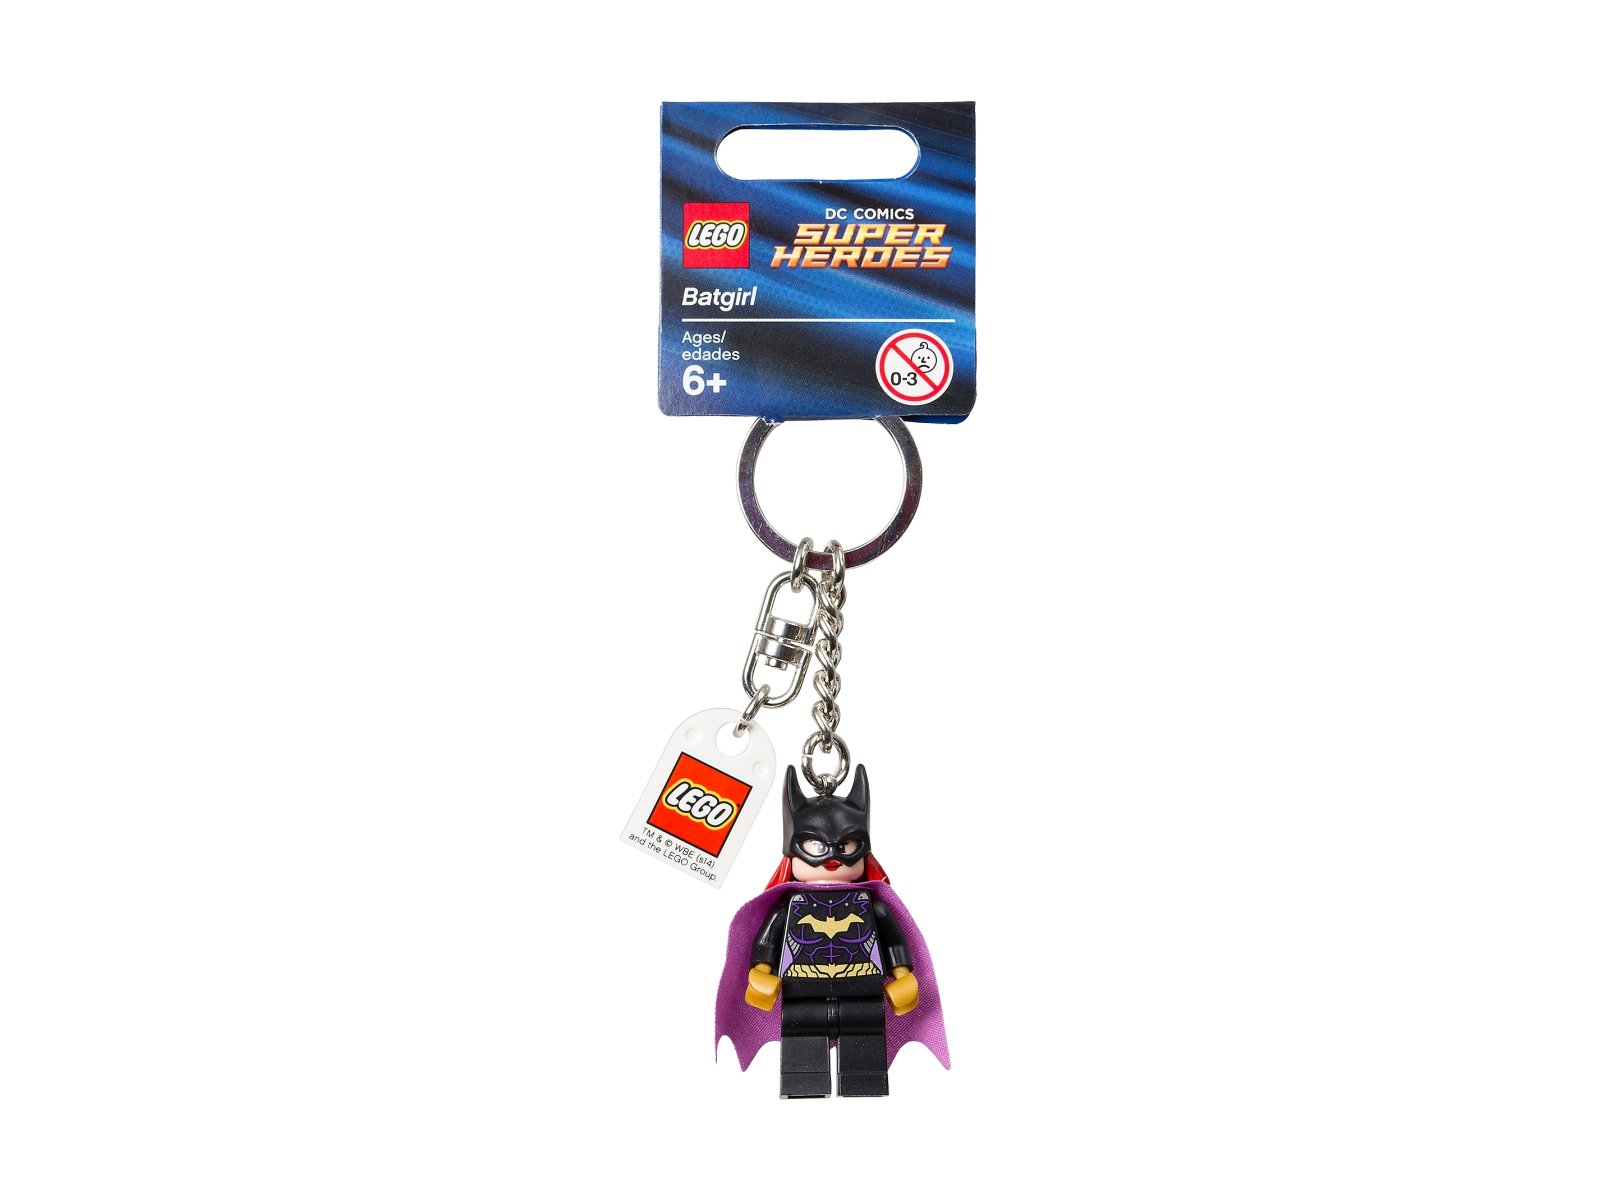 LEGO 851005 DC Comics Super Heroes Brelok do kluczy z Batgirl